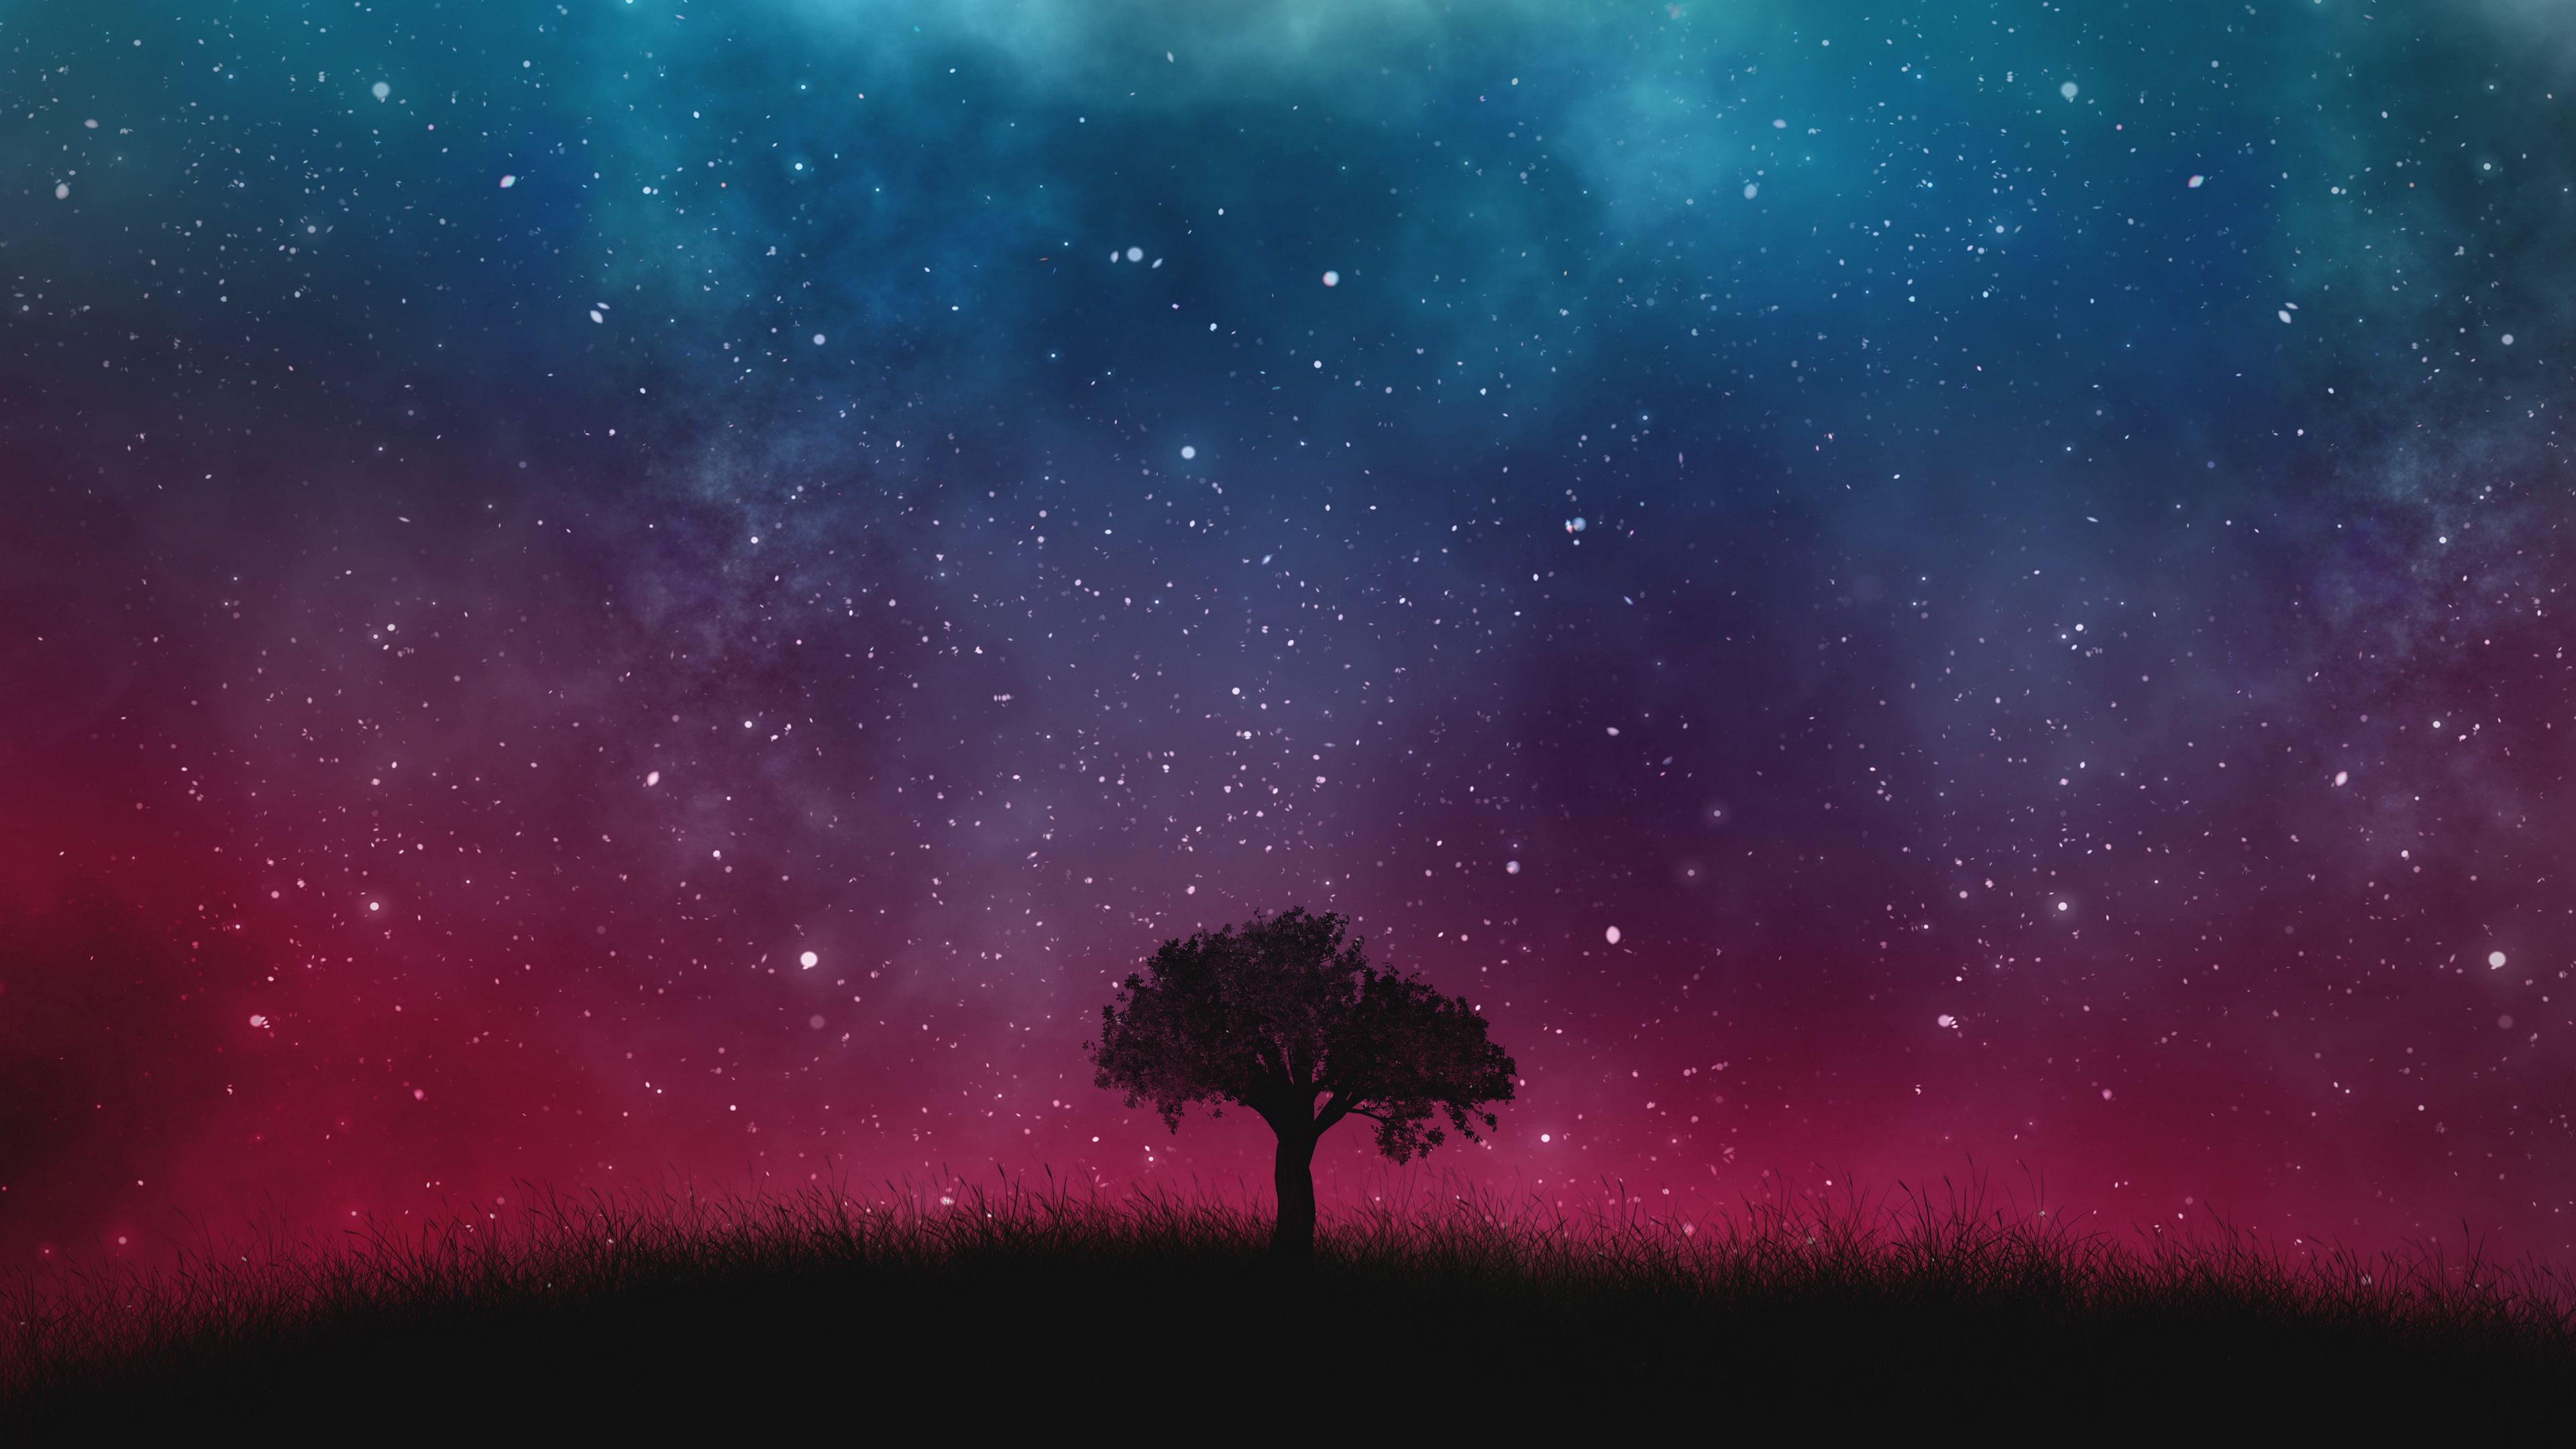 Download wallpaper 3840x2160 starry sky, night, tree 4k uhd 16:9 hd  background